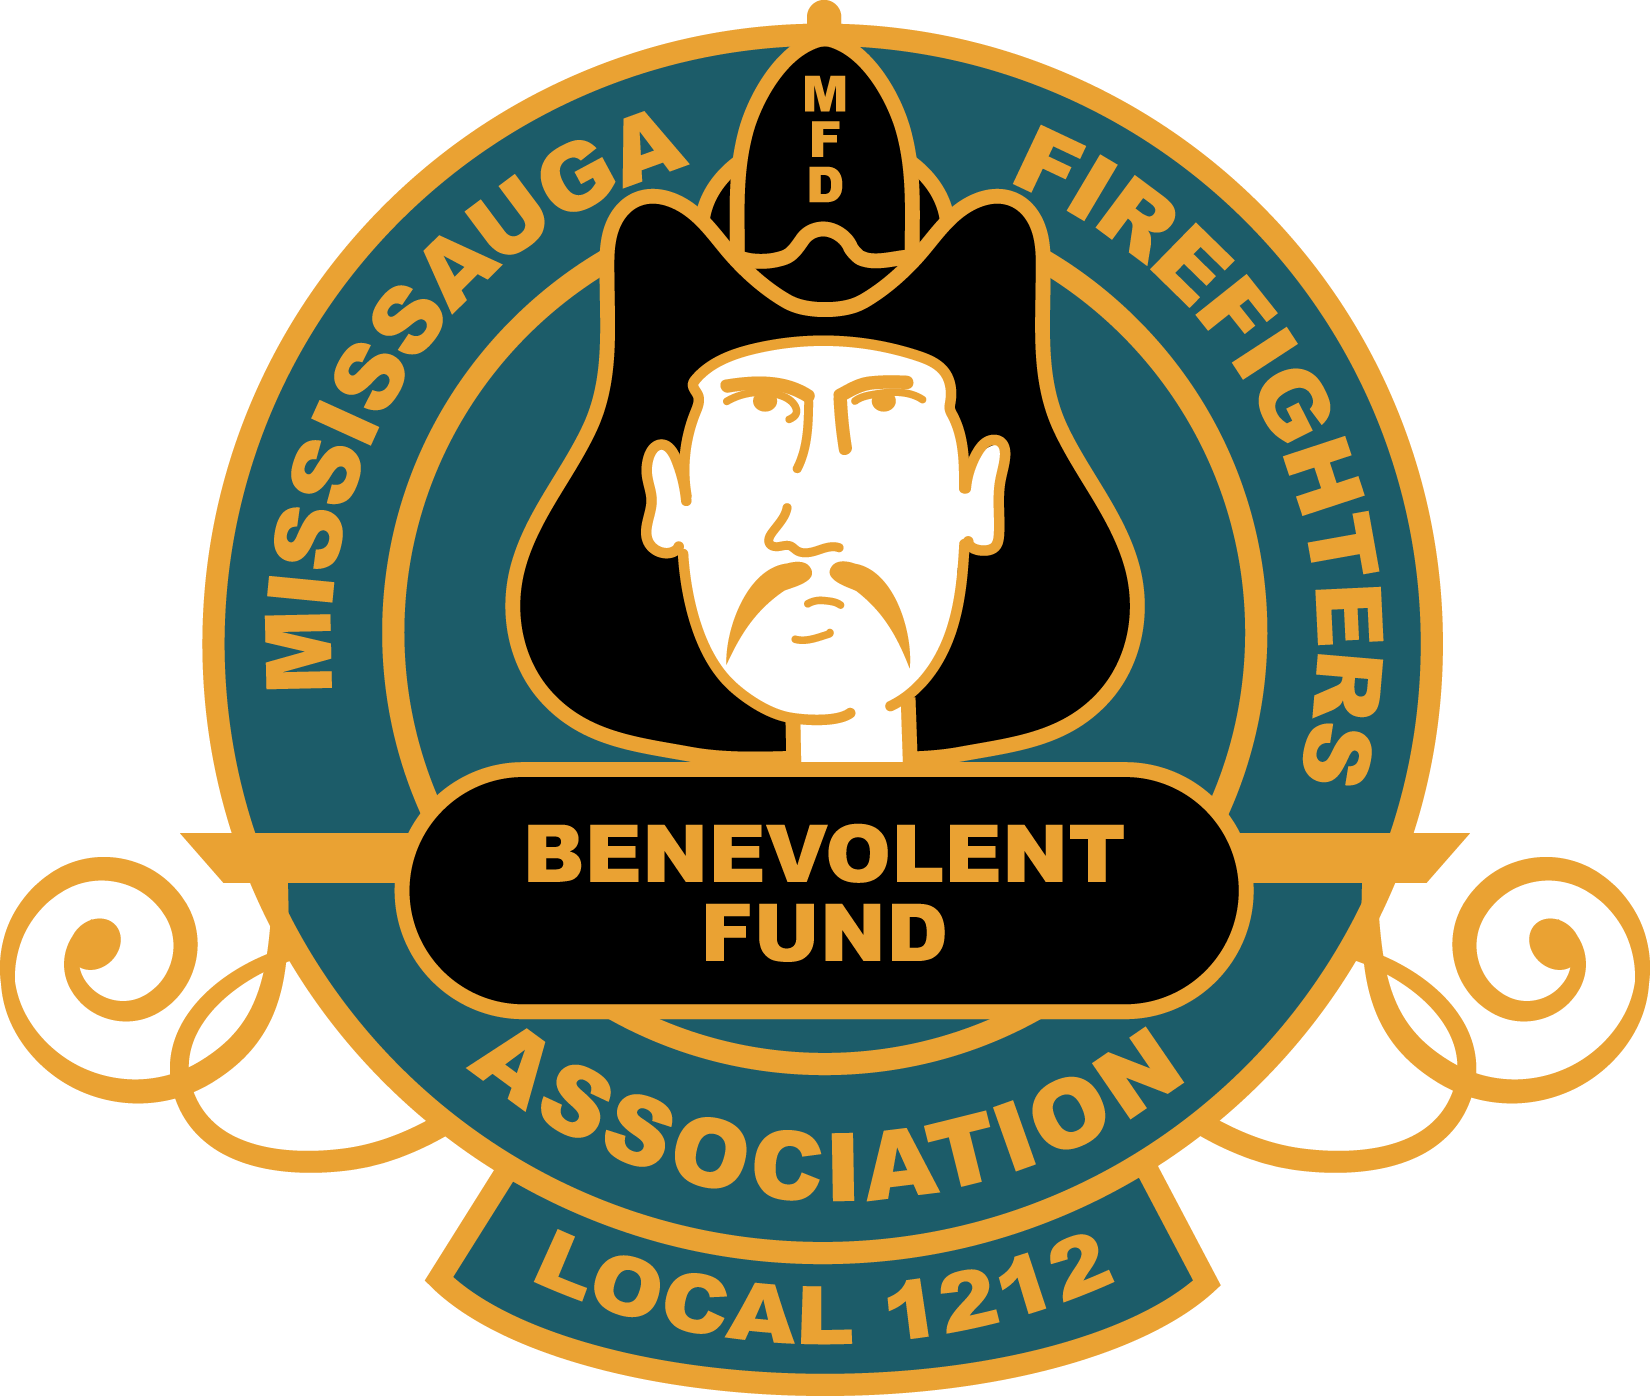 Mississauga Fire Fighters Benevolent Fund logo